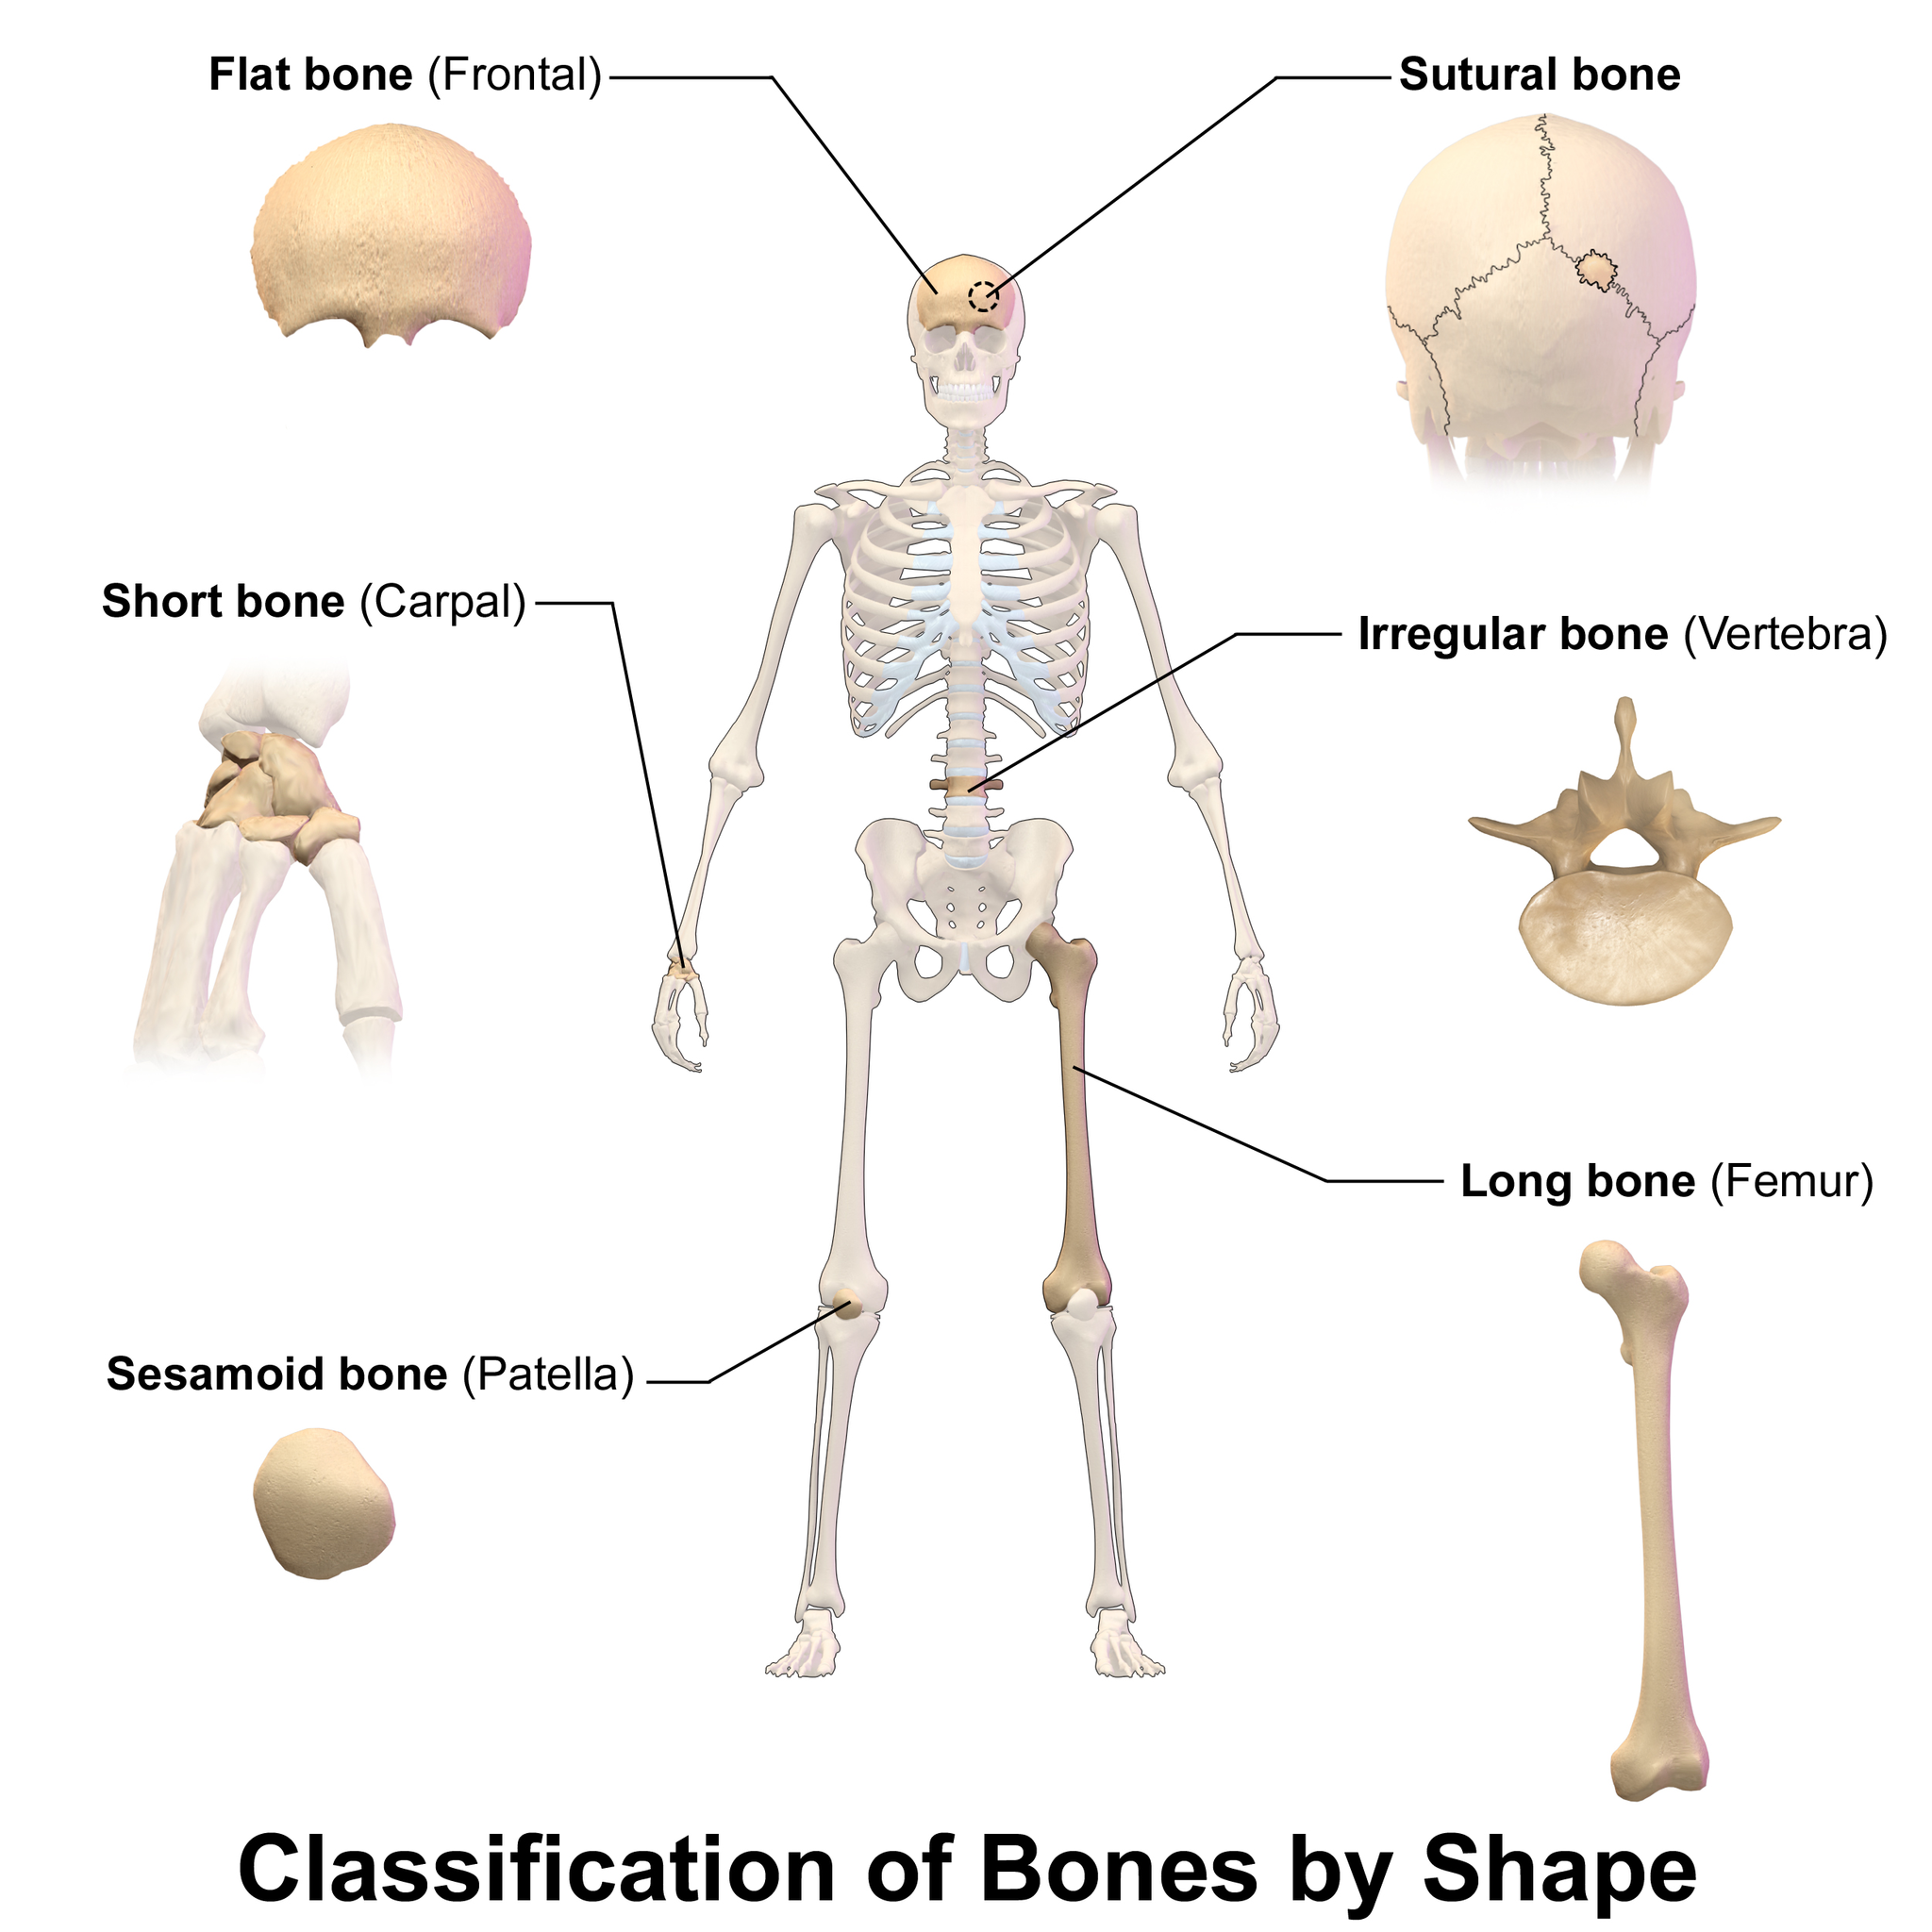 11.4.7 Bone Types of the Body